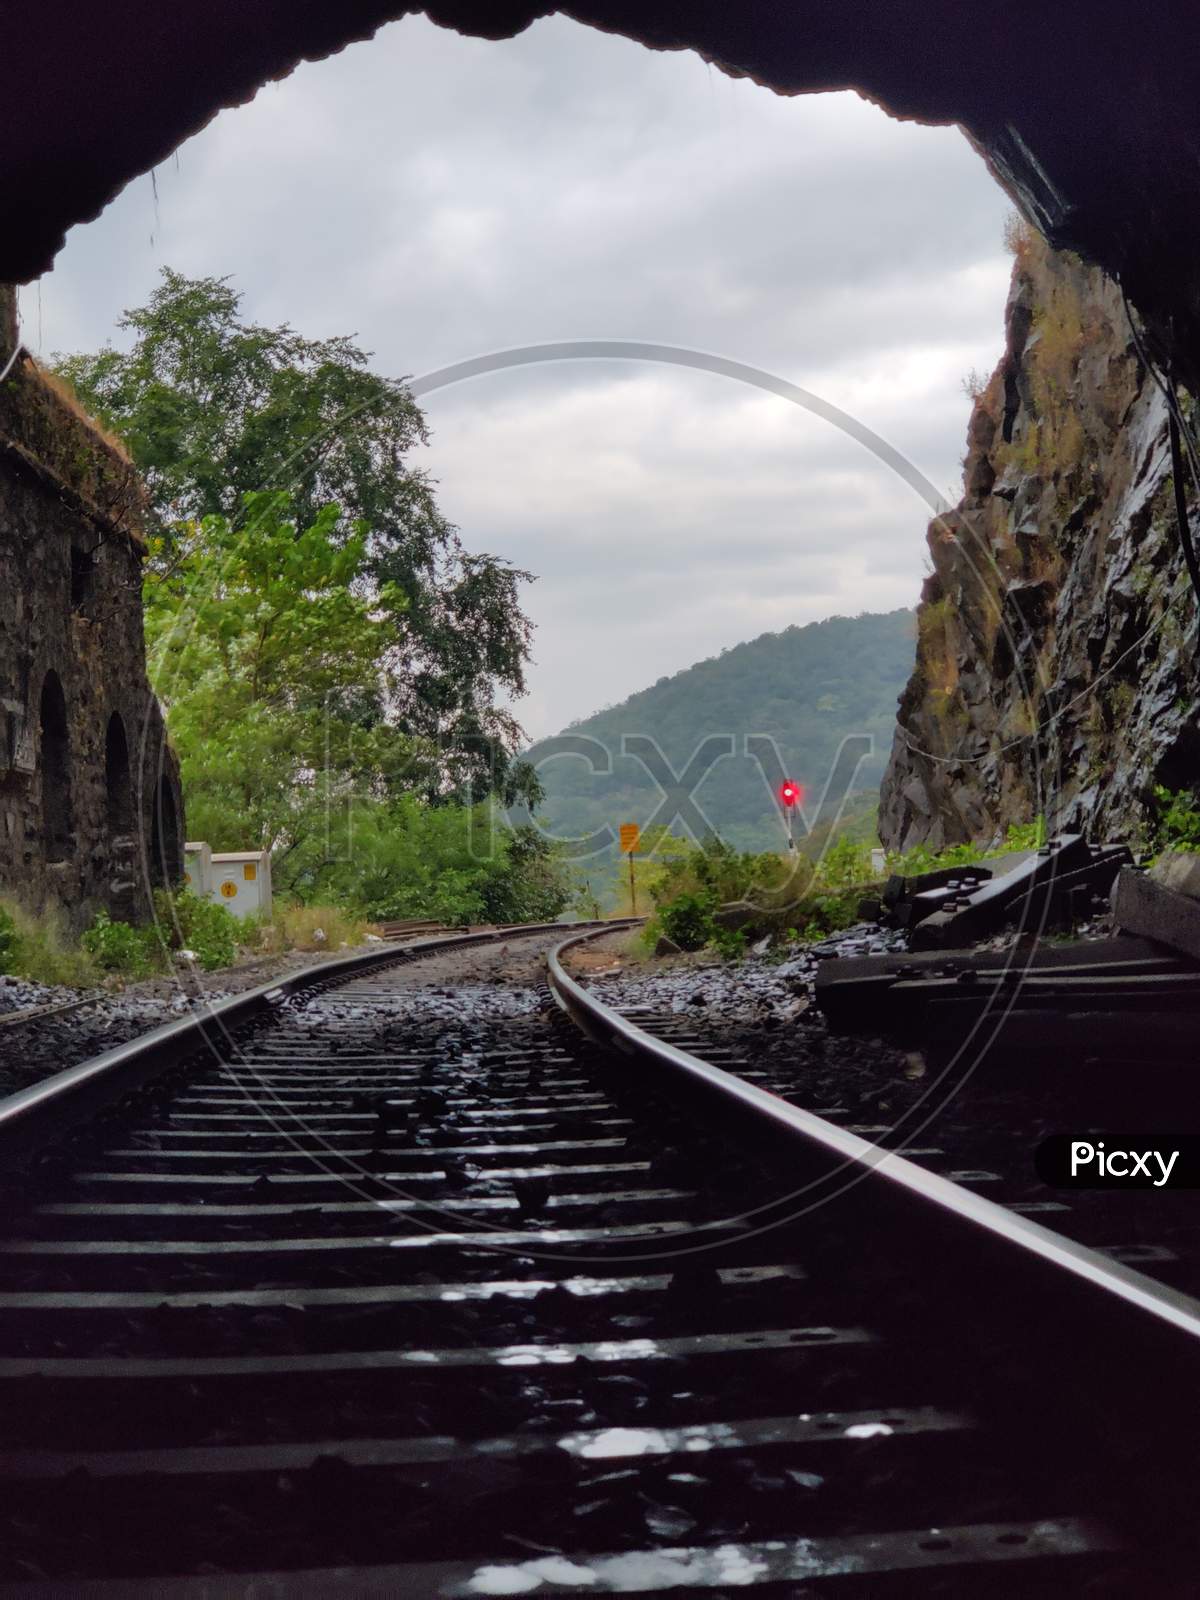 The railway tunnel dudhsagar